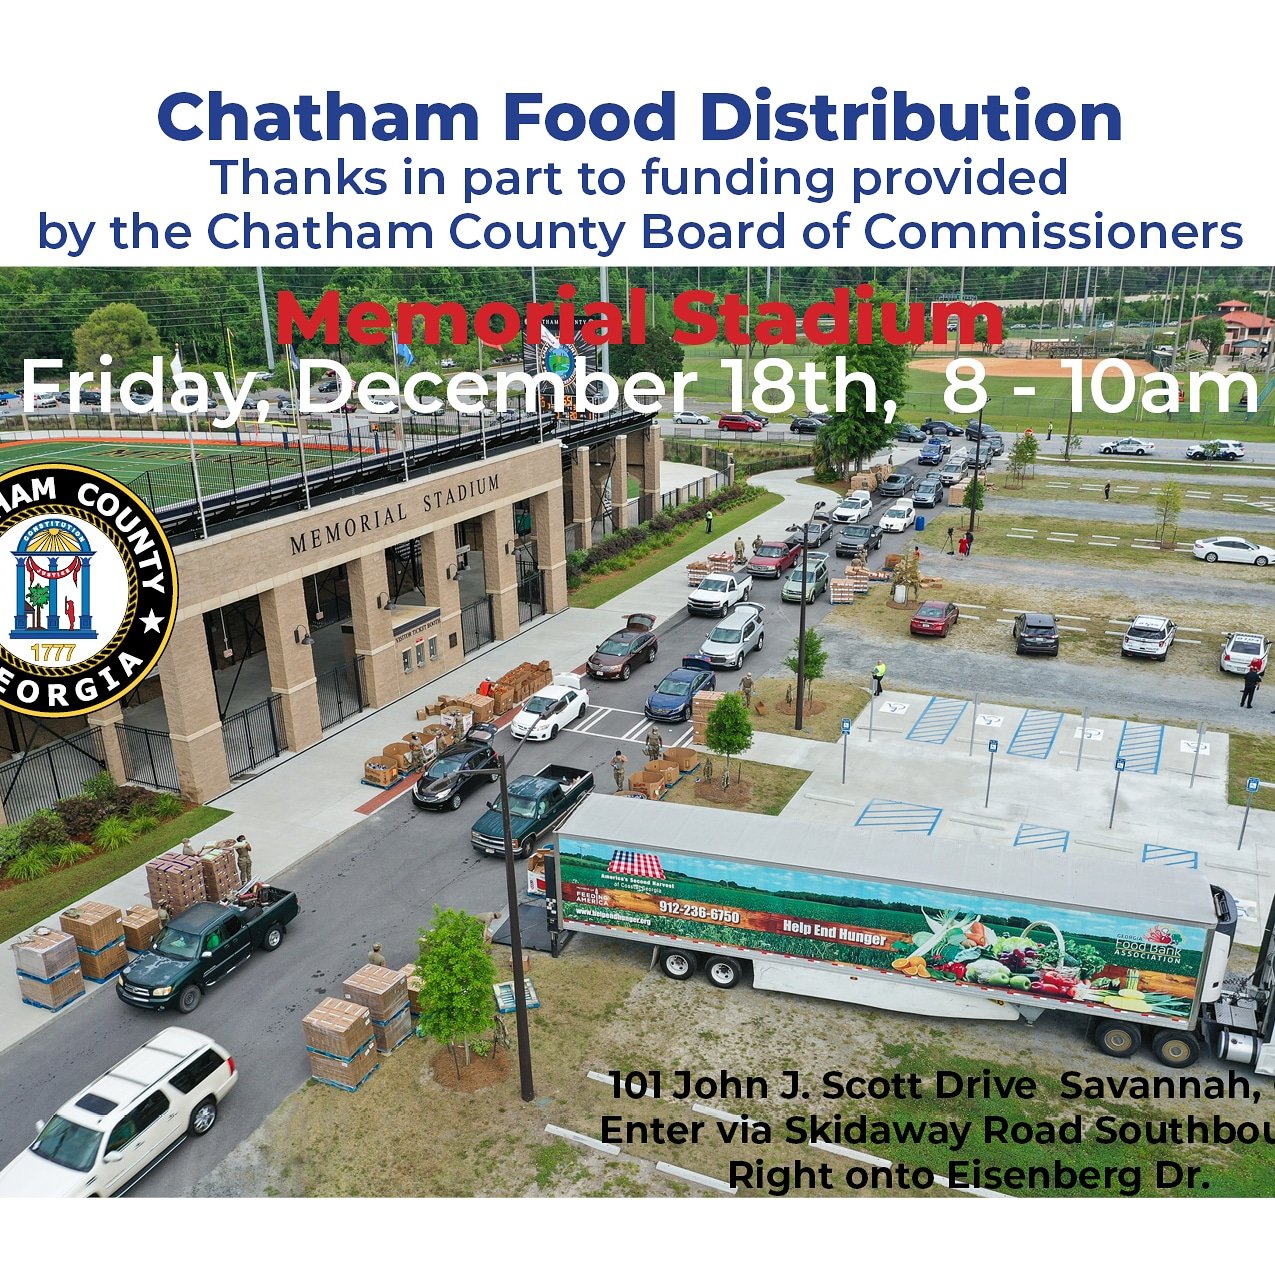 Chatham Food Distribution Savannah 2020 free food